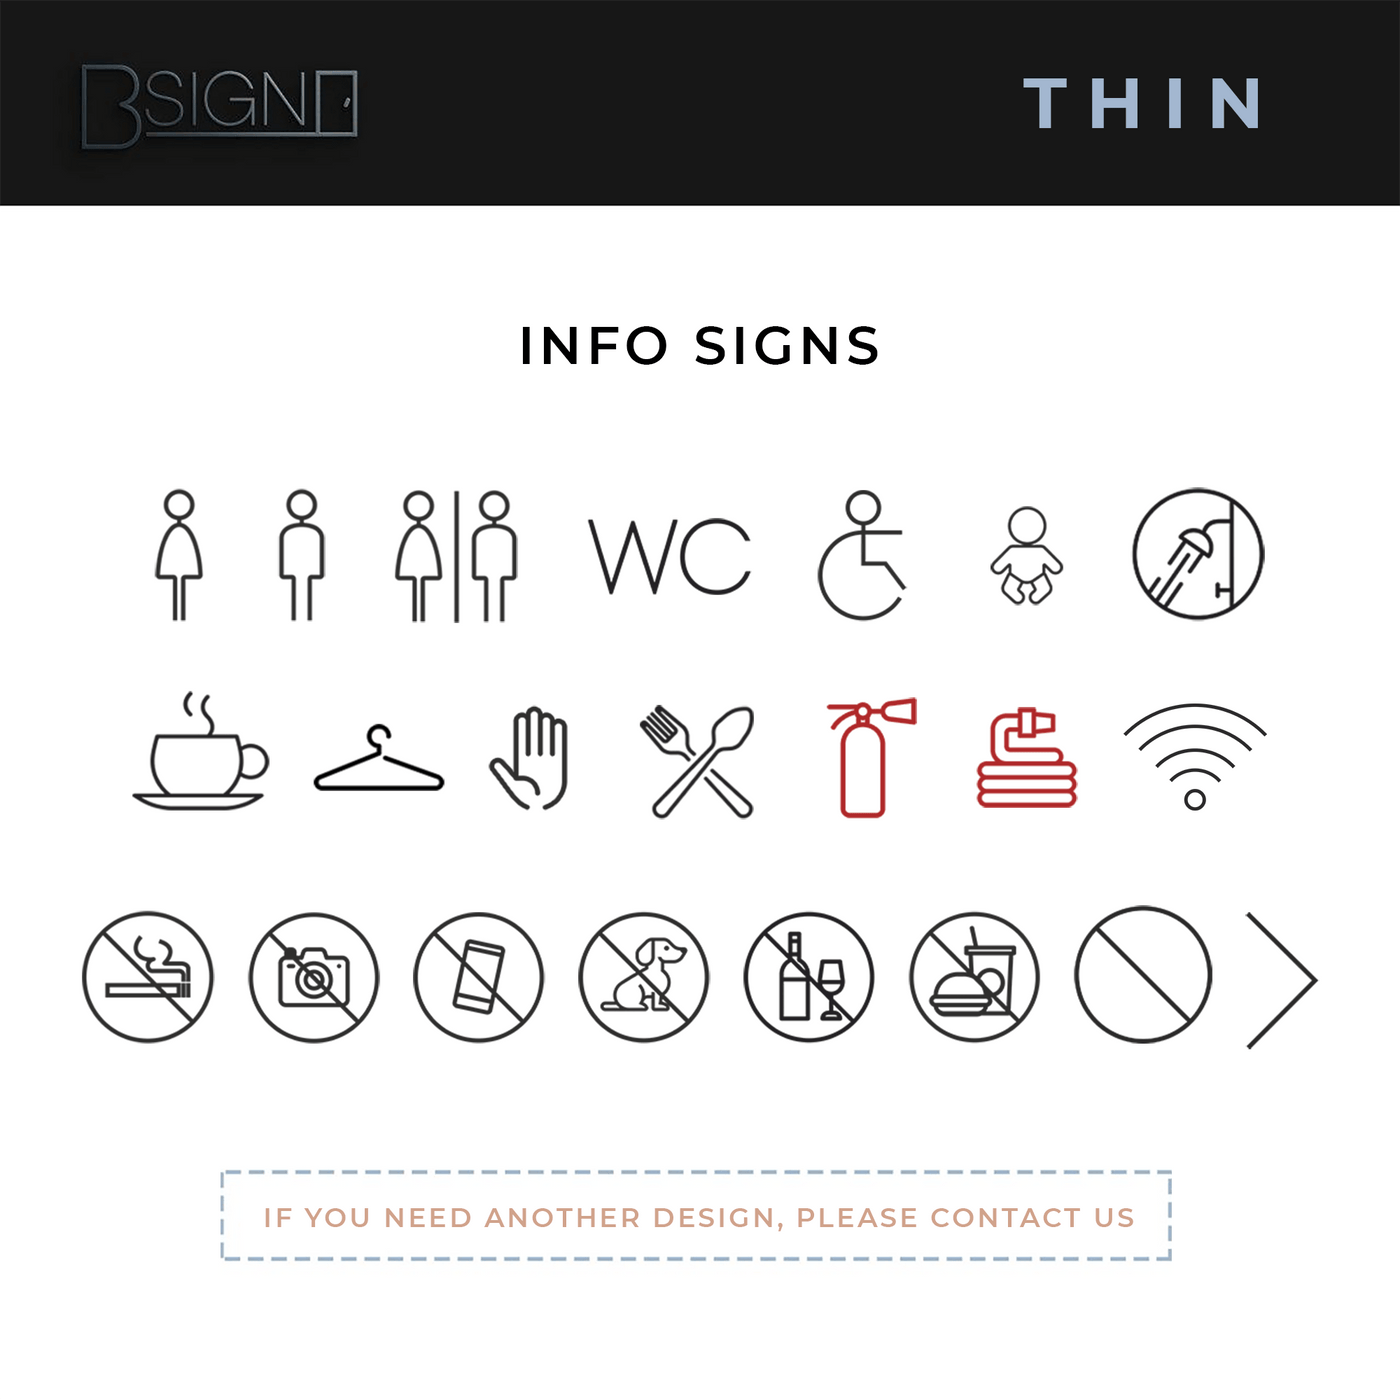 Acrylic Women Restroom Sign "Thin" Design